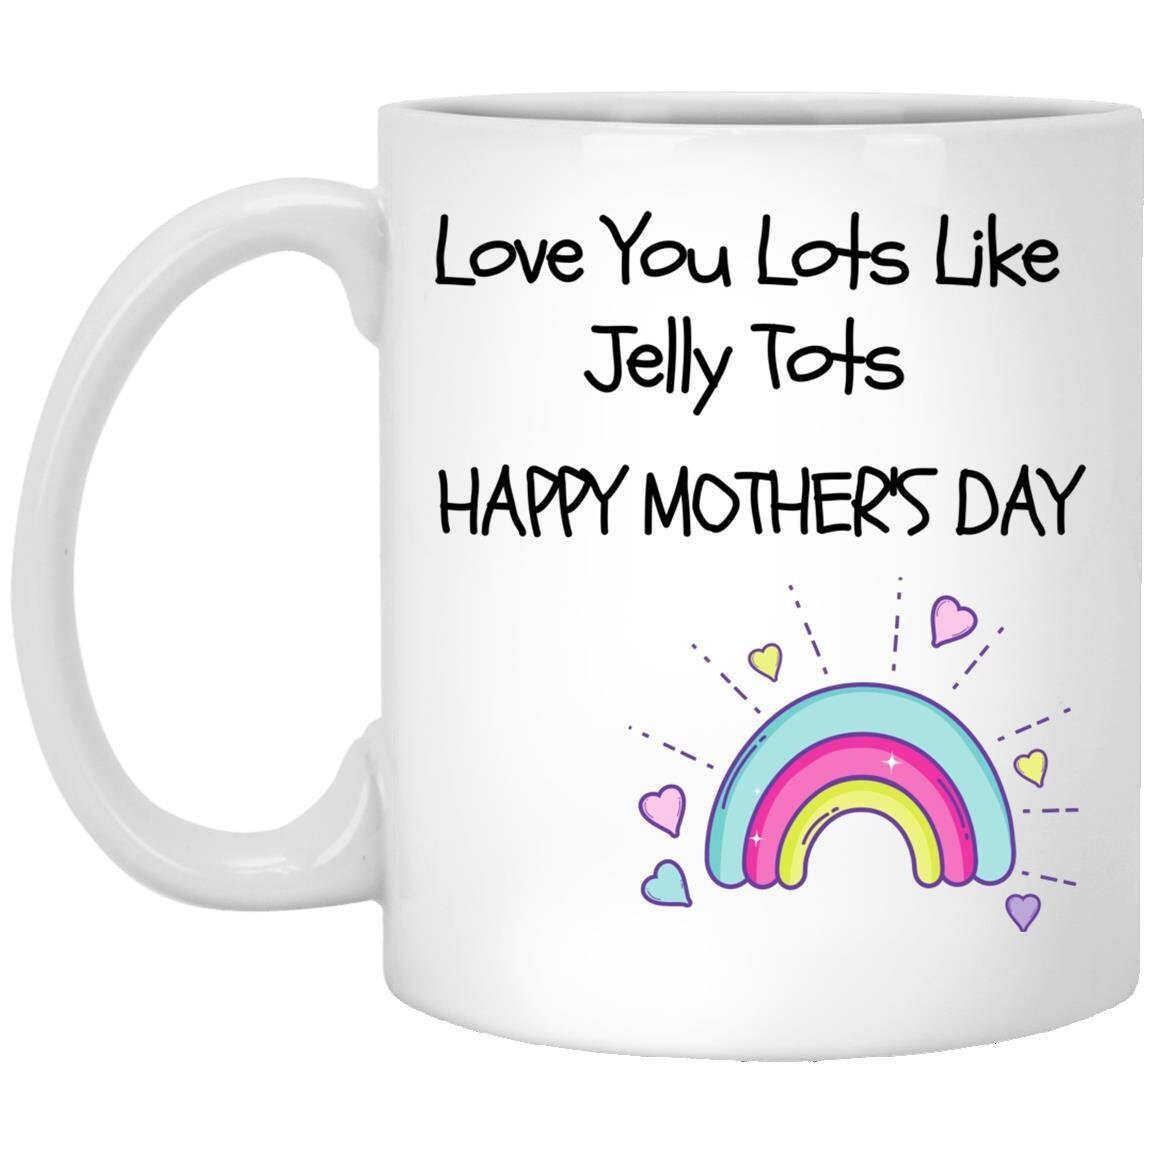 Mummy love you lots like Jelly tots Mothers Day ceramic Mug 